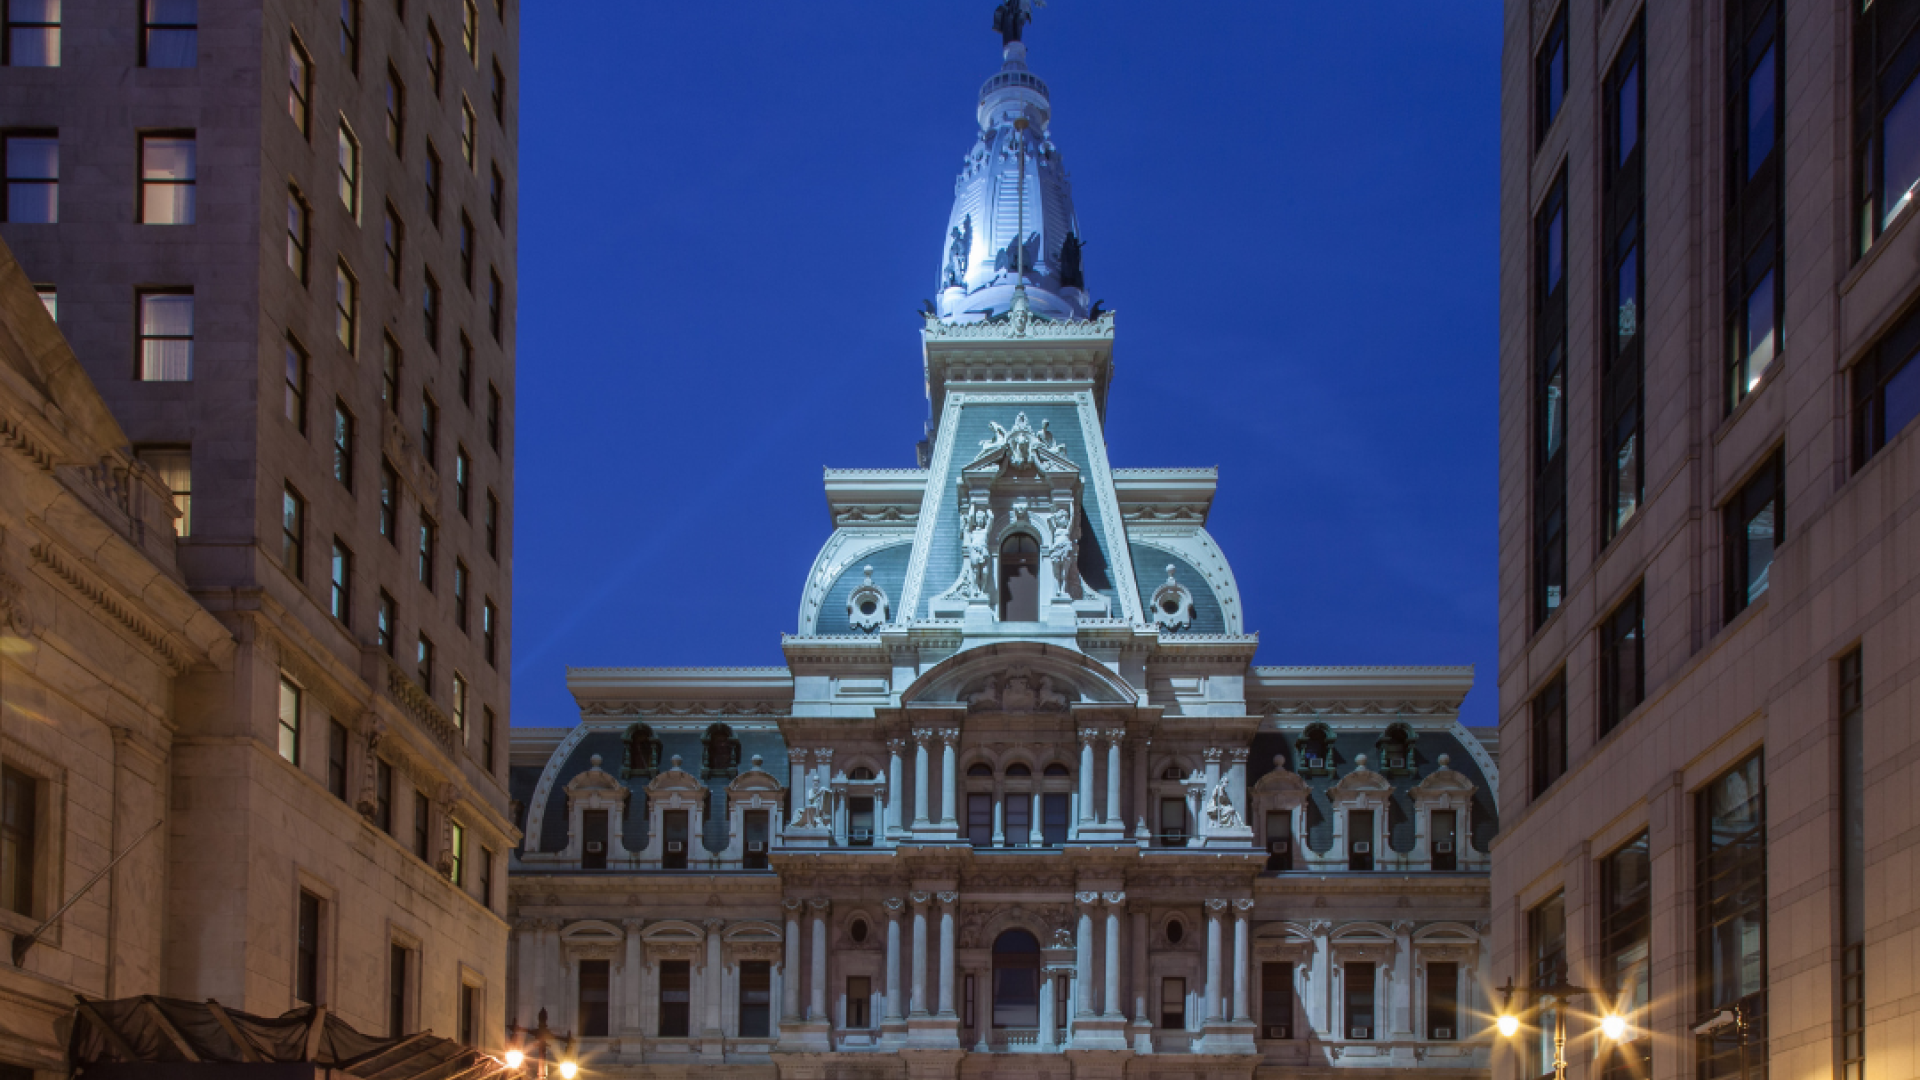 Philadelphia's city hall at dusk